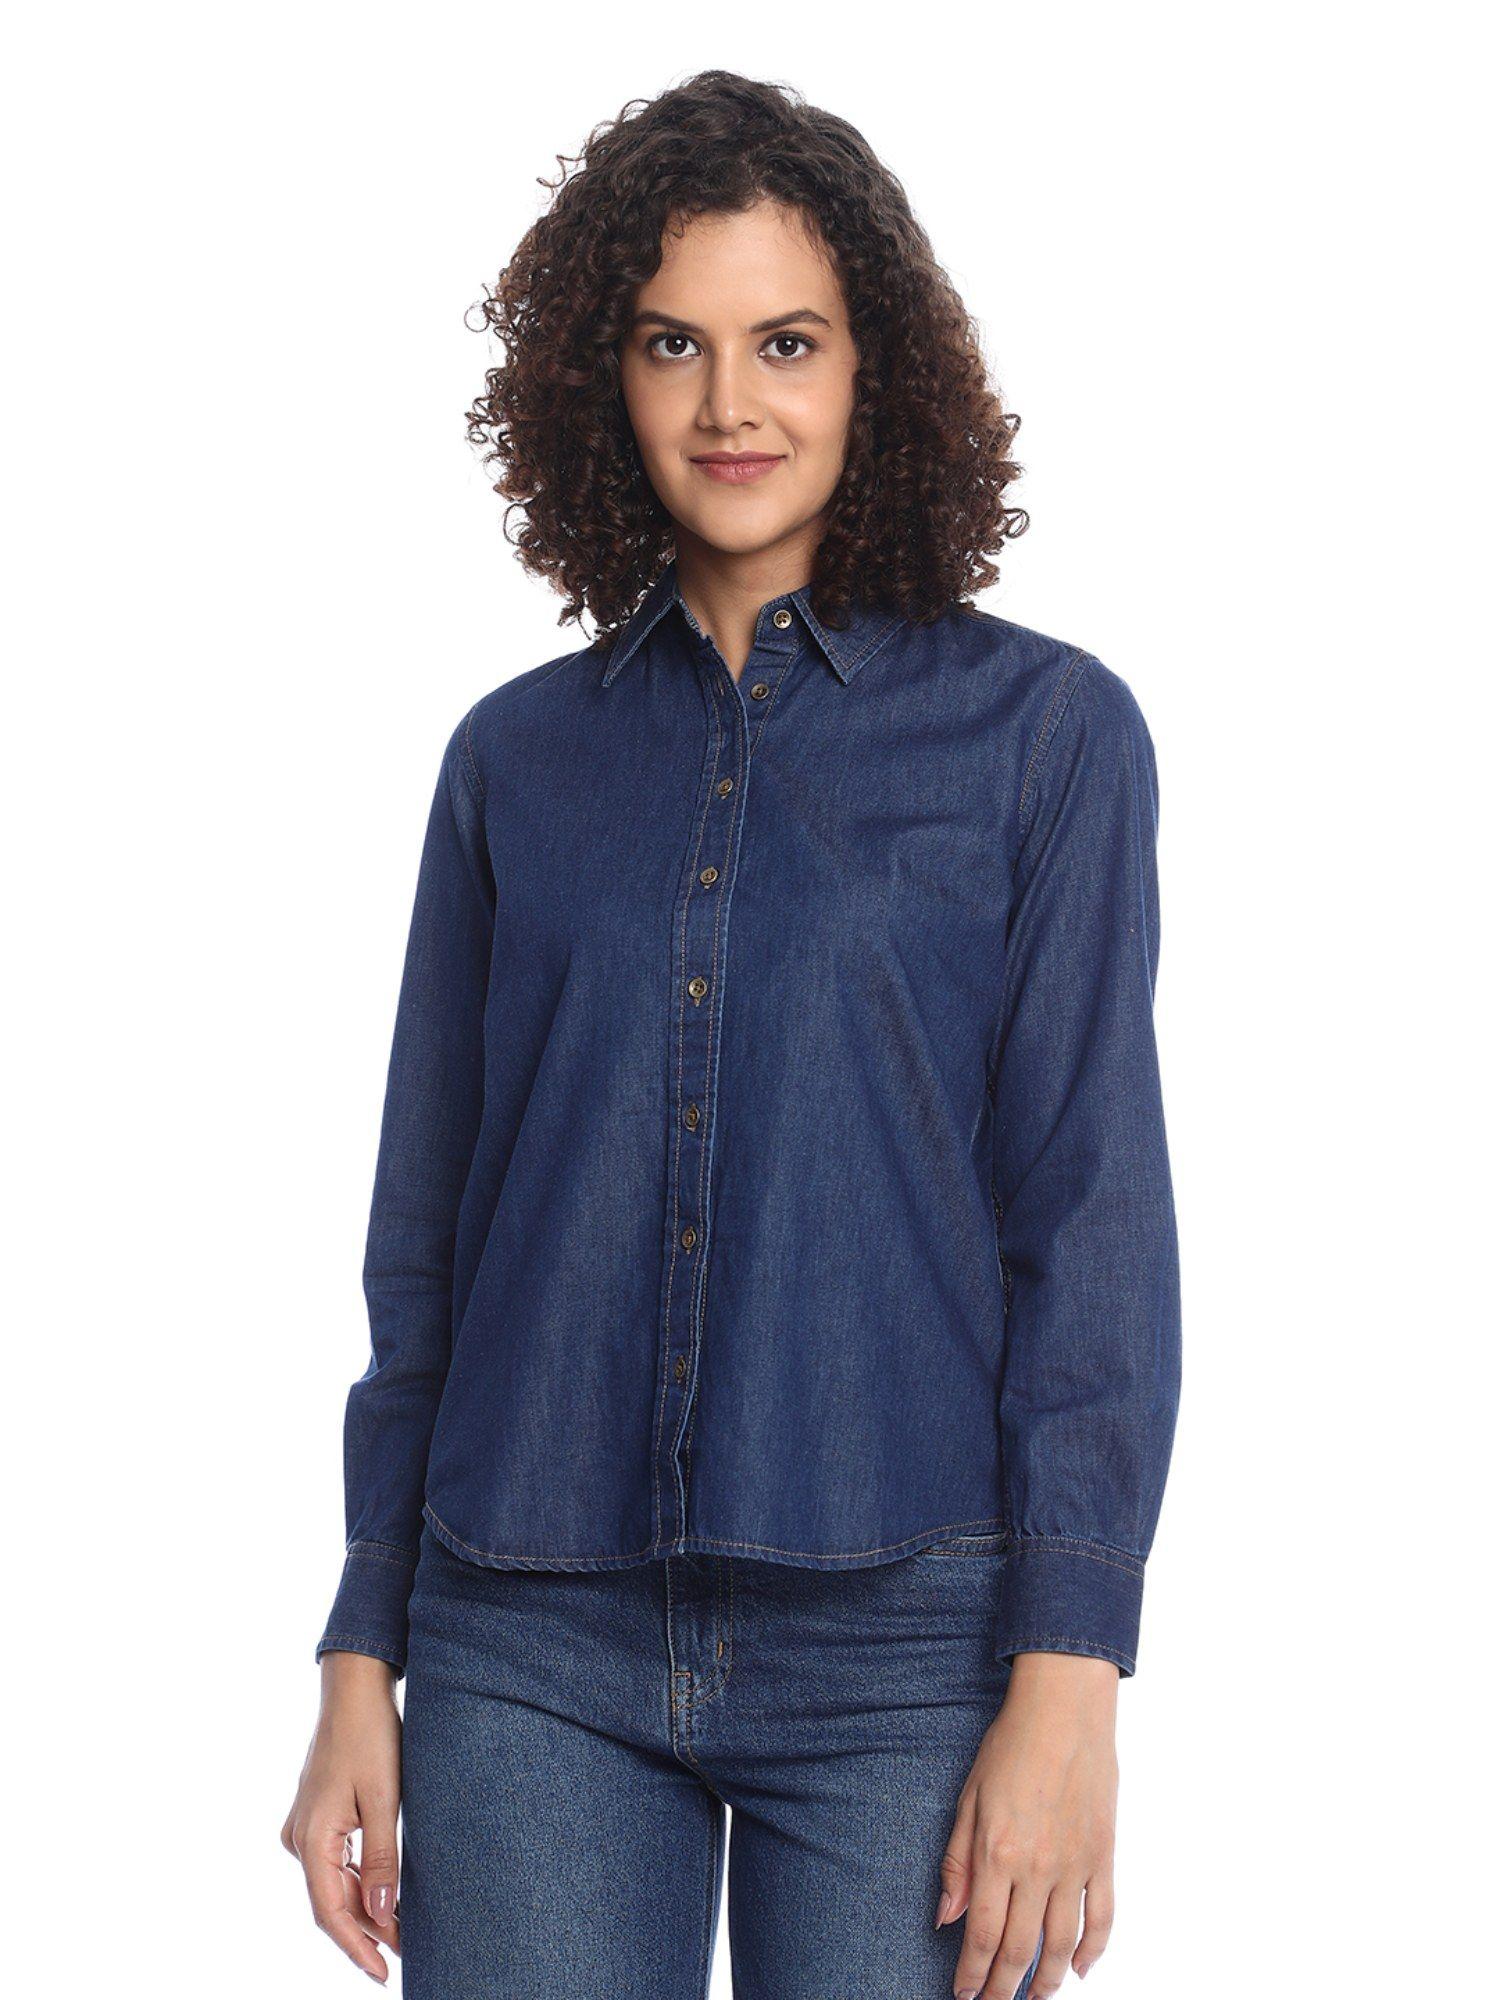 banita-indigo-color-denim-drop-shoulder-shirt-for-women